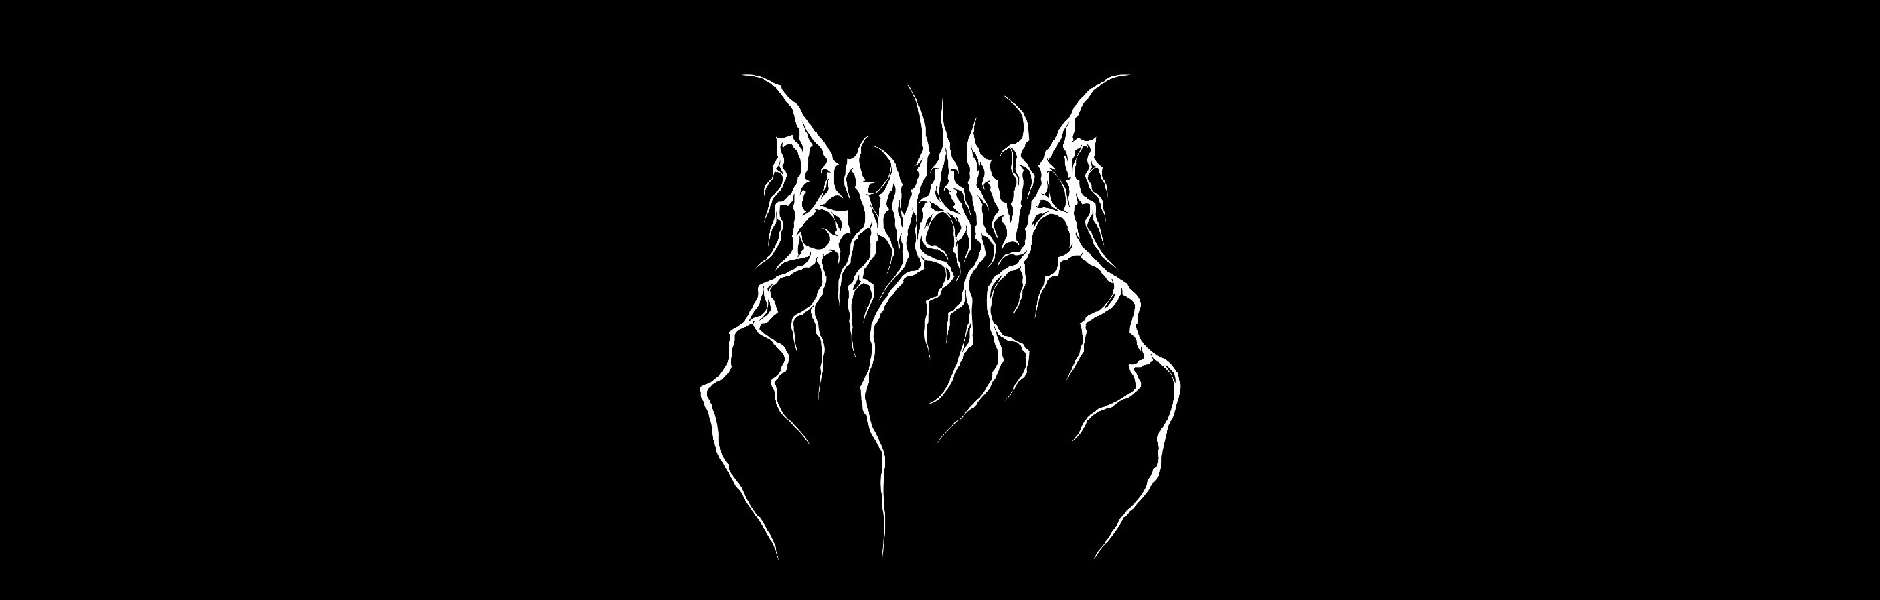 bwana